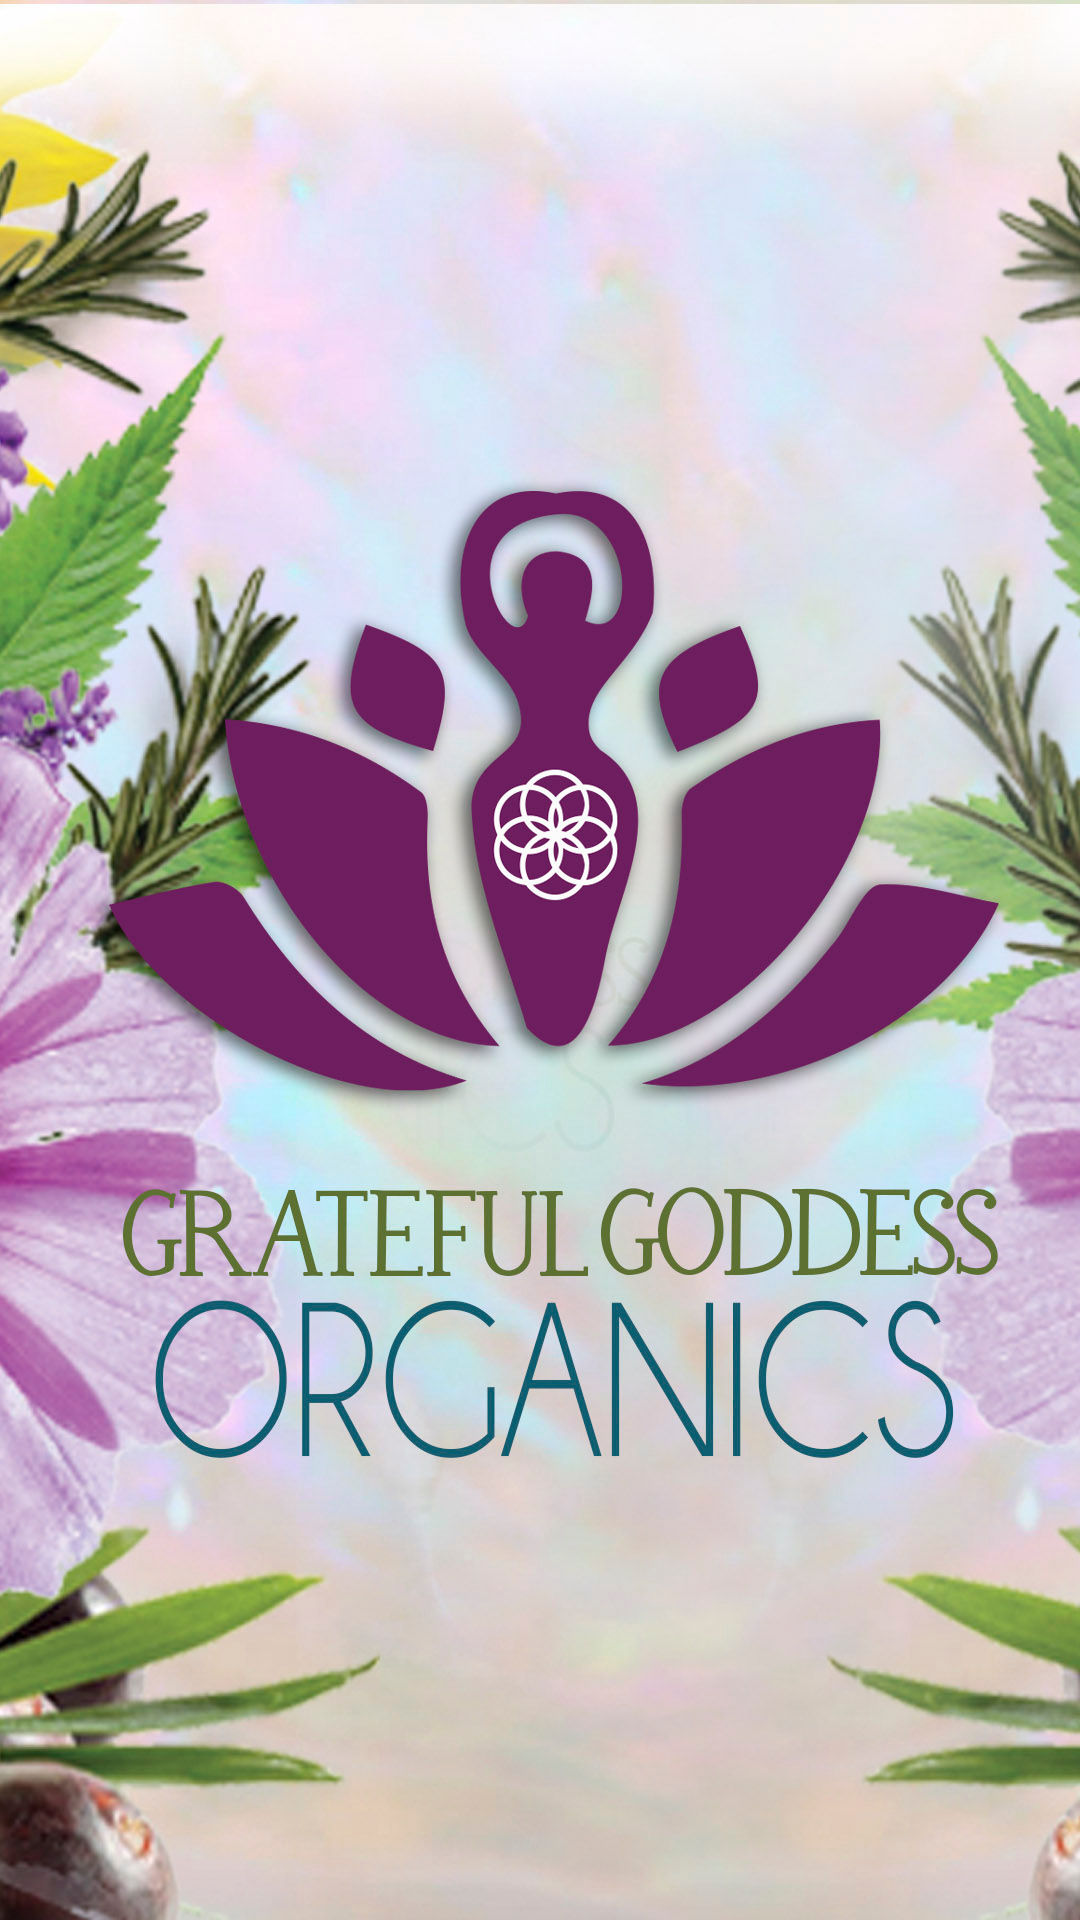 Grateful Goddess Organics